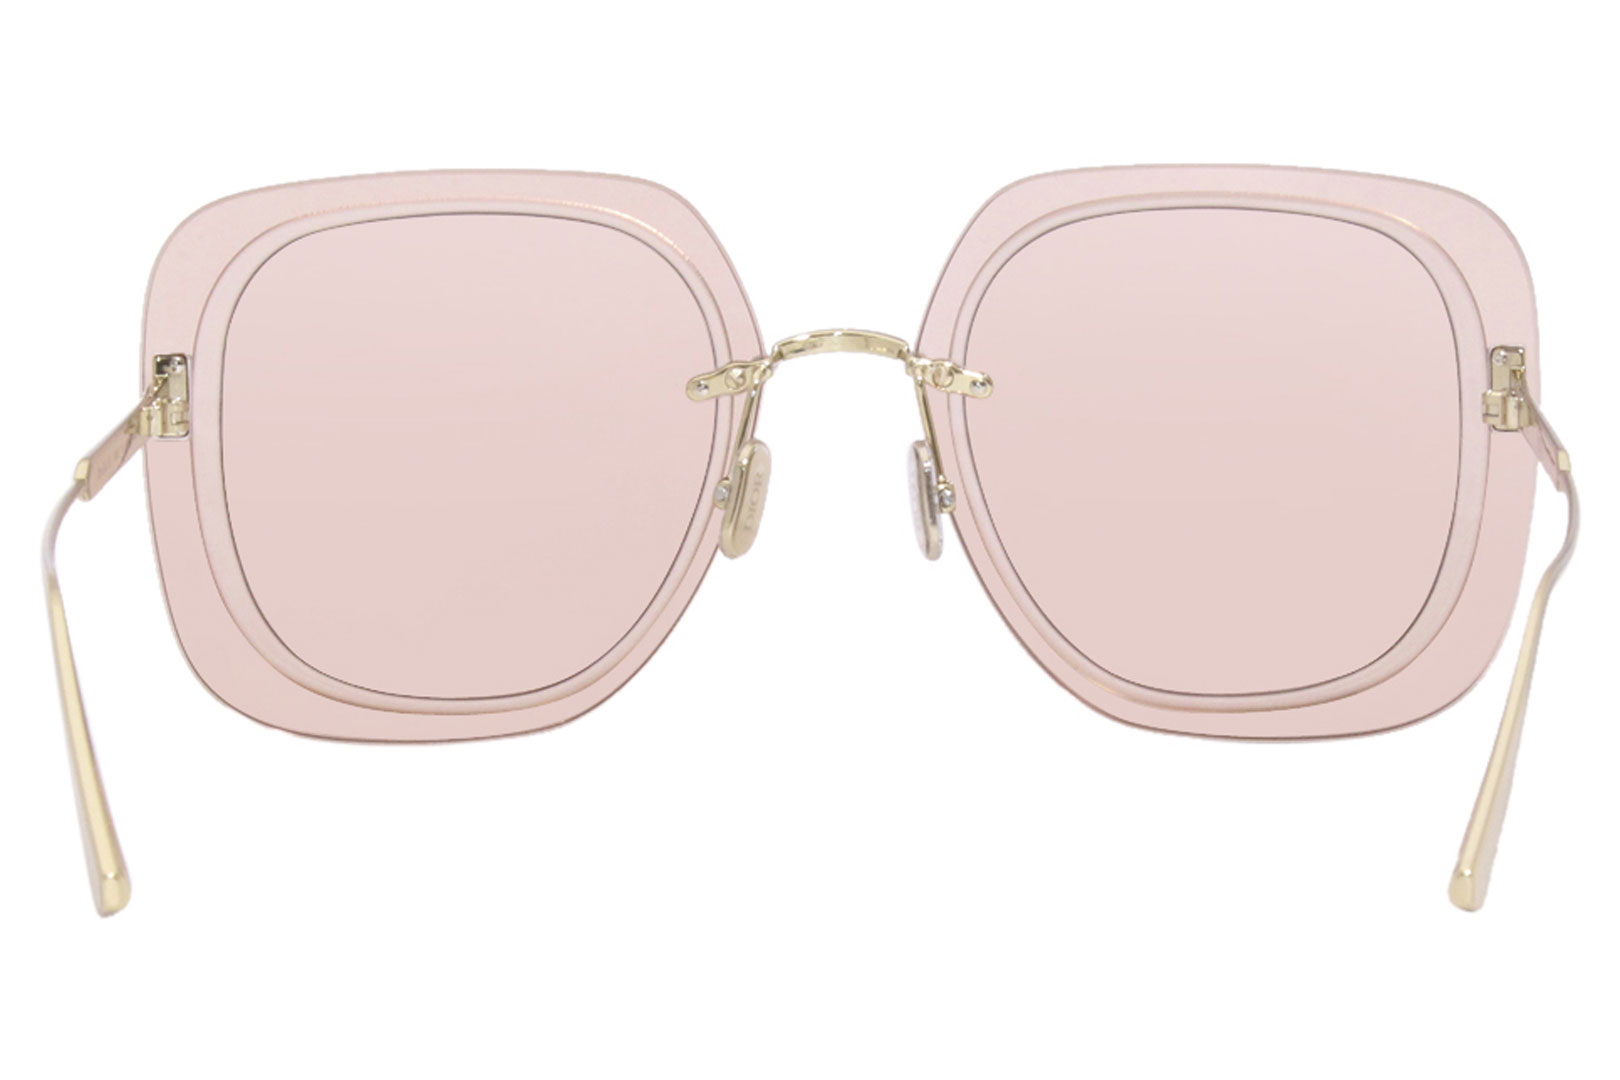 UltraDior 65mm Oversize Square Sunglasses in Gold/Rose